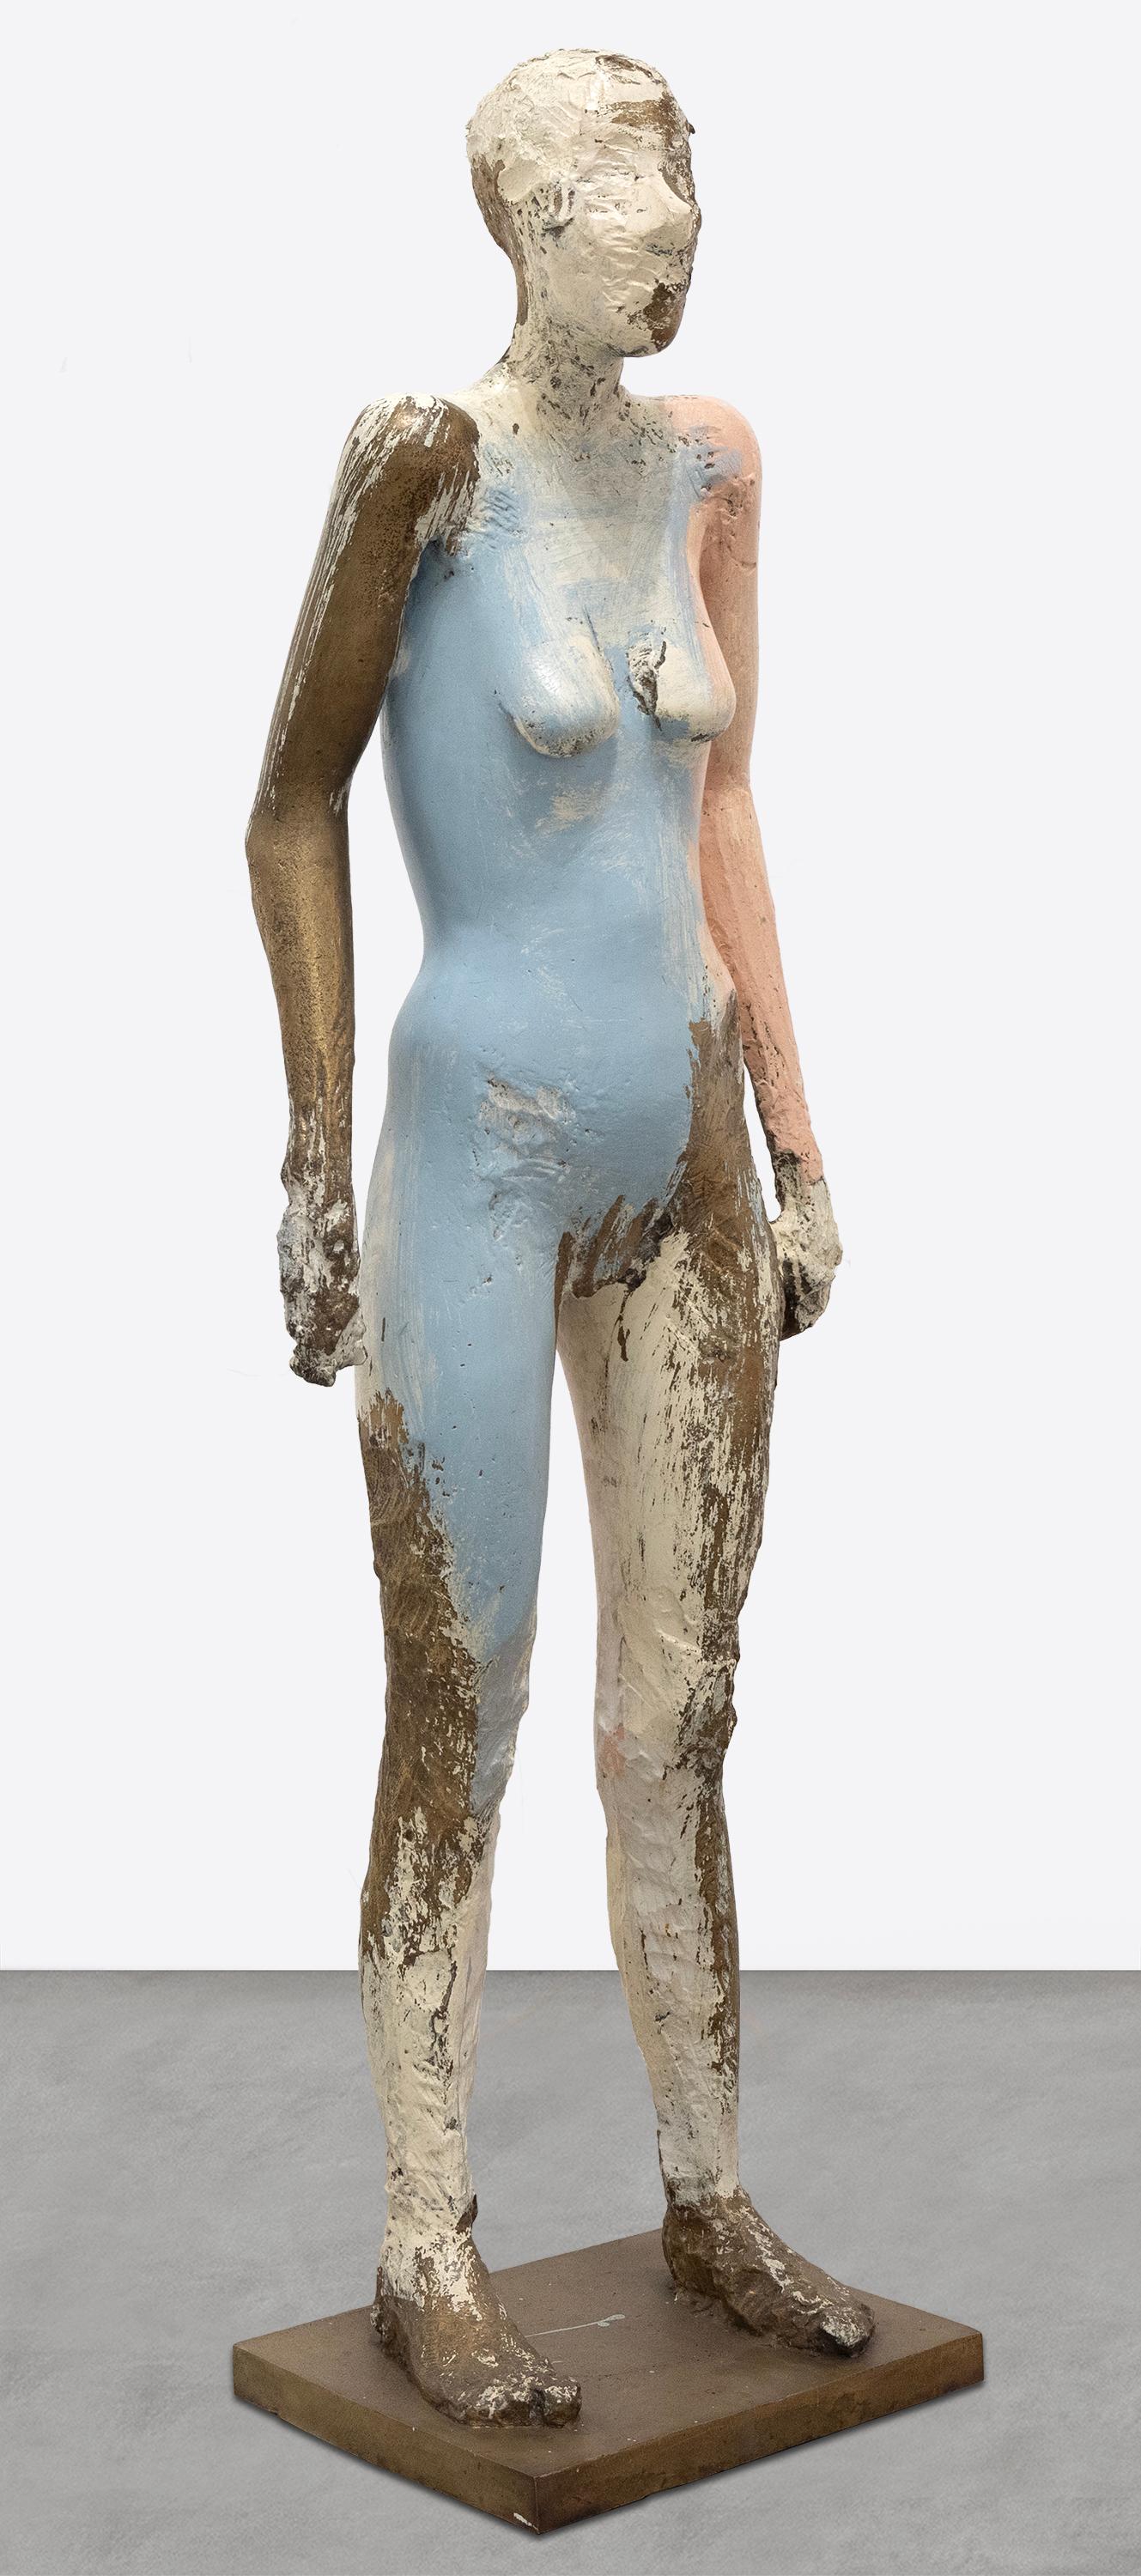 Manuel Neri Figurative Sculpture - Untitled Standing Figure No. 3